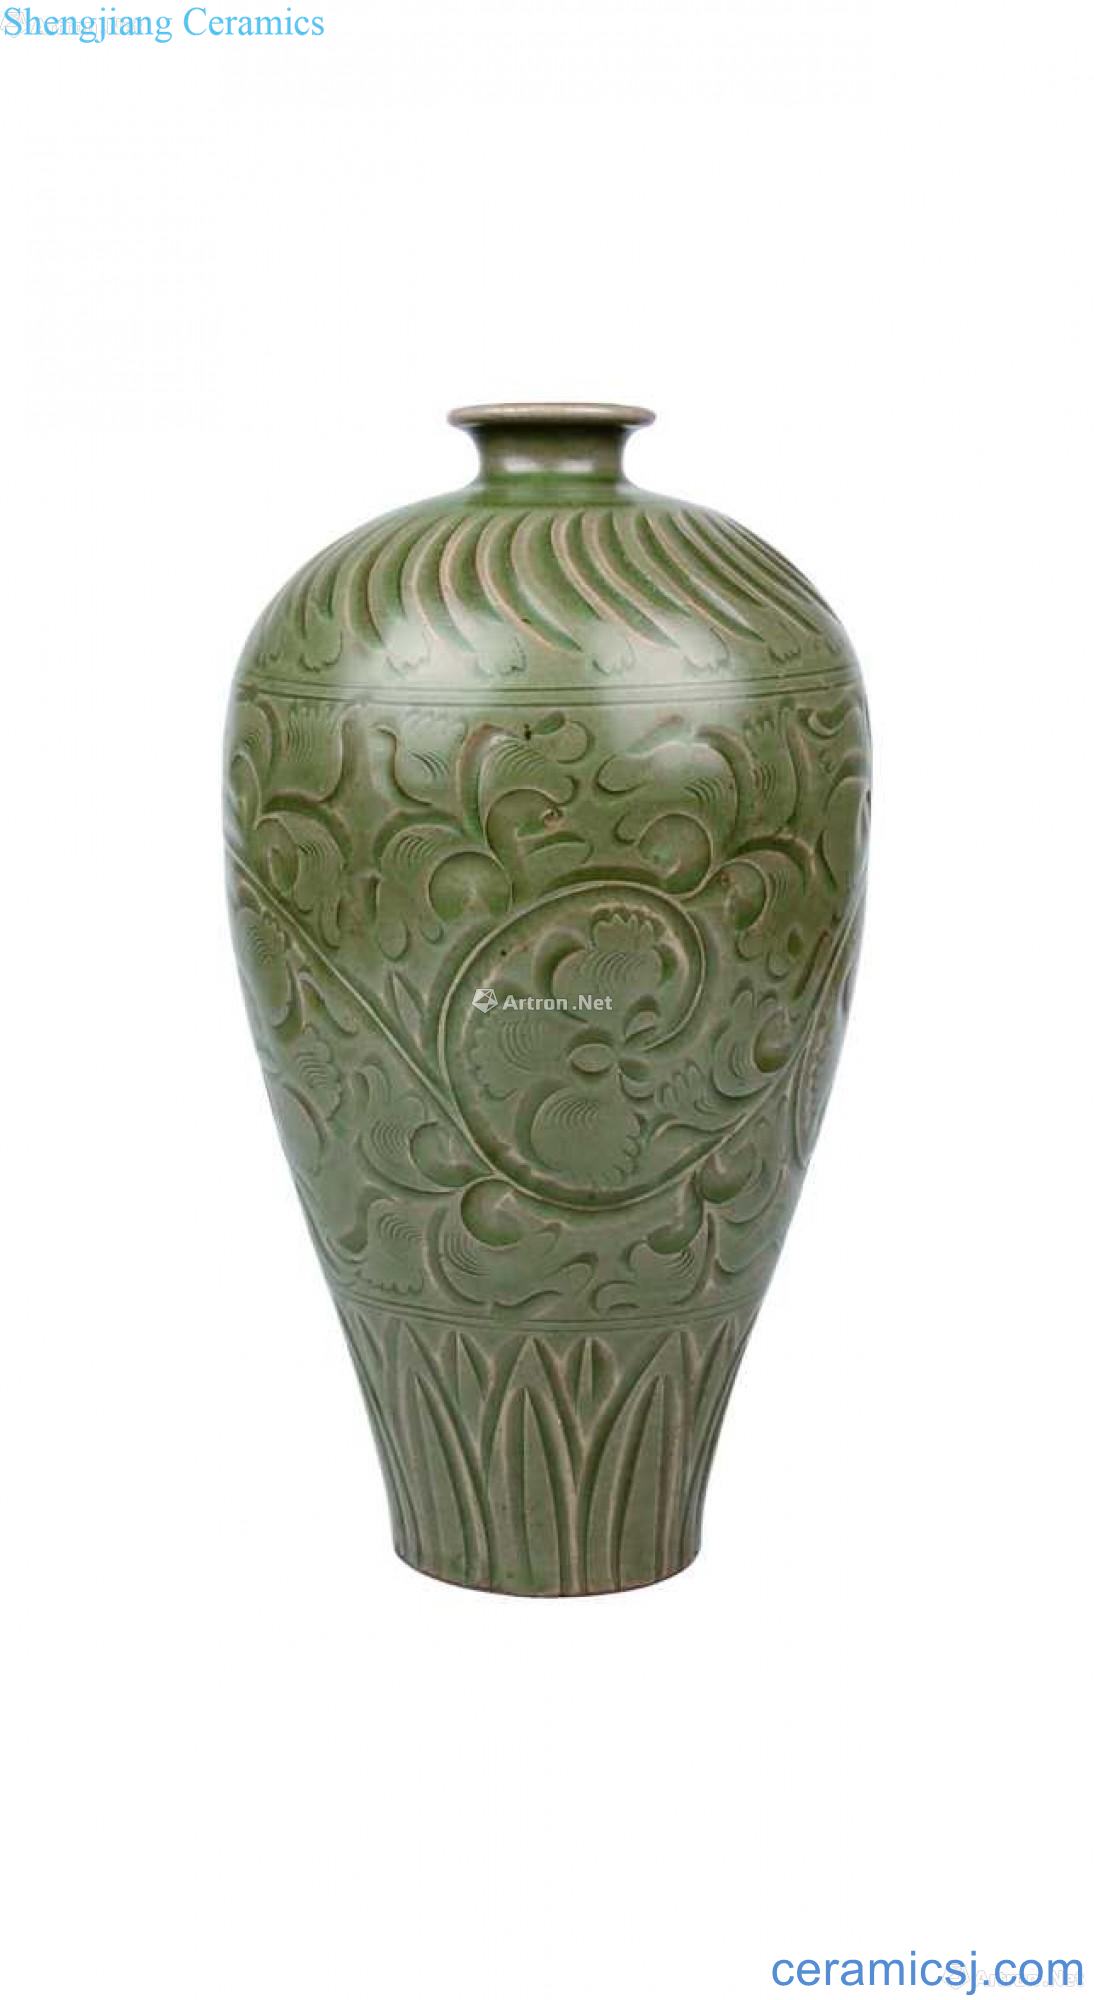 Yao state kiln carved plum bottle